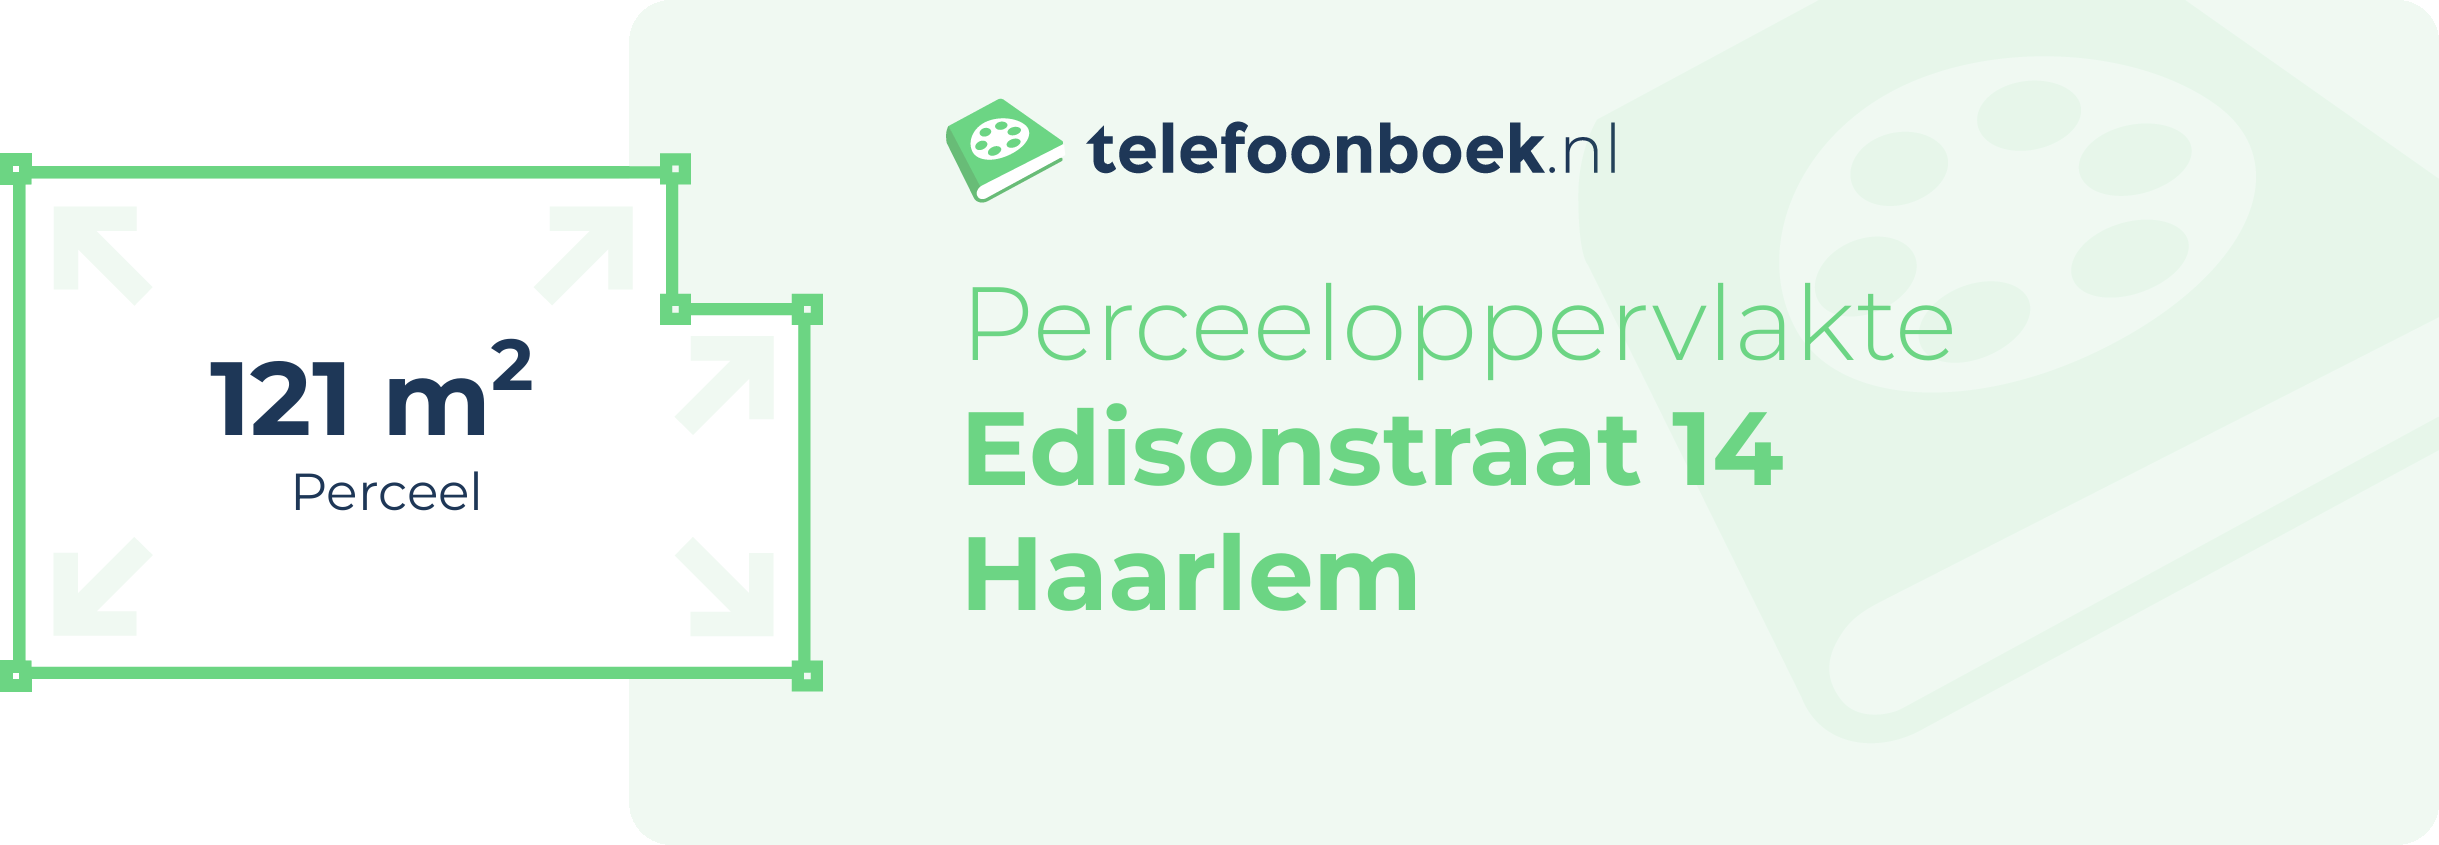 Perceeloppervlakte Edisonstraat 14 Haarlem